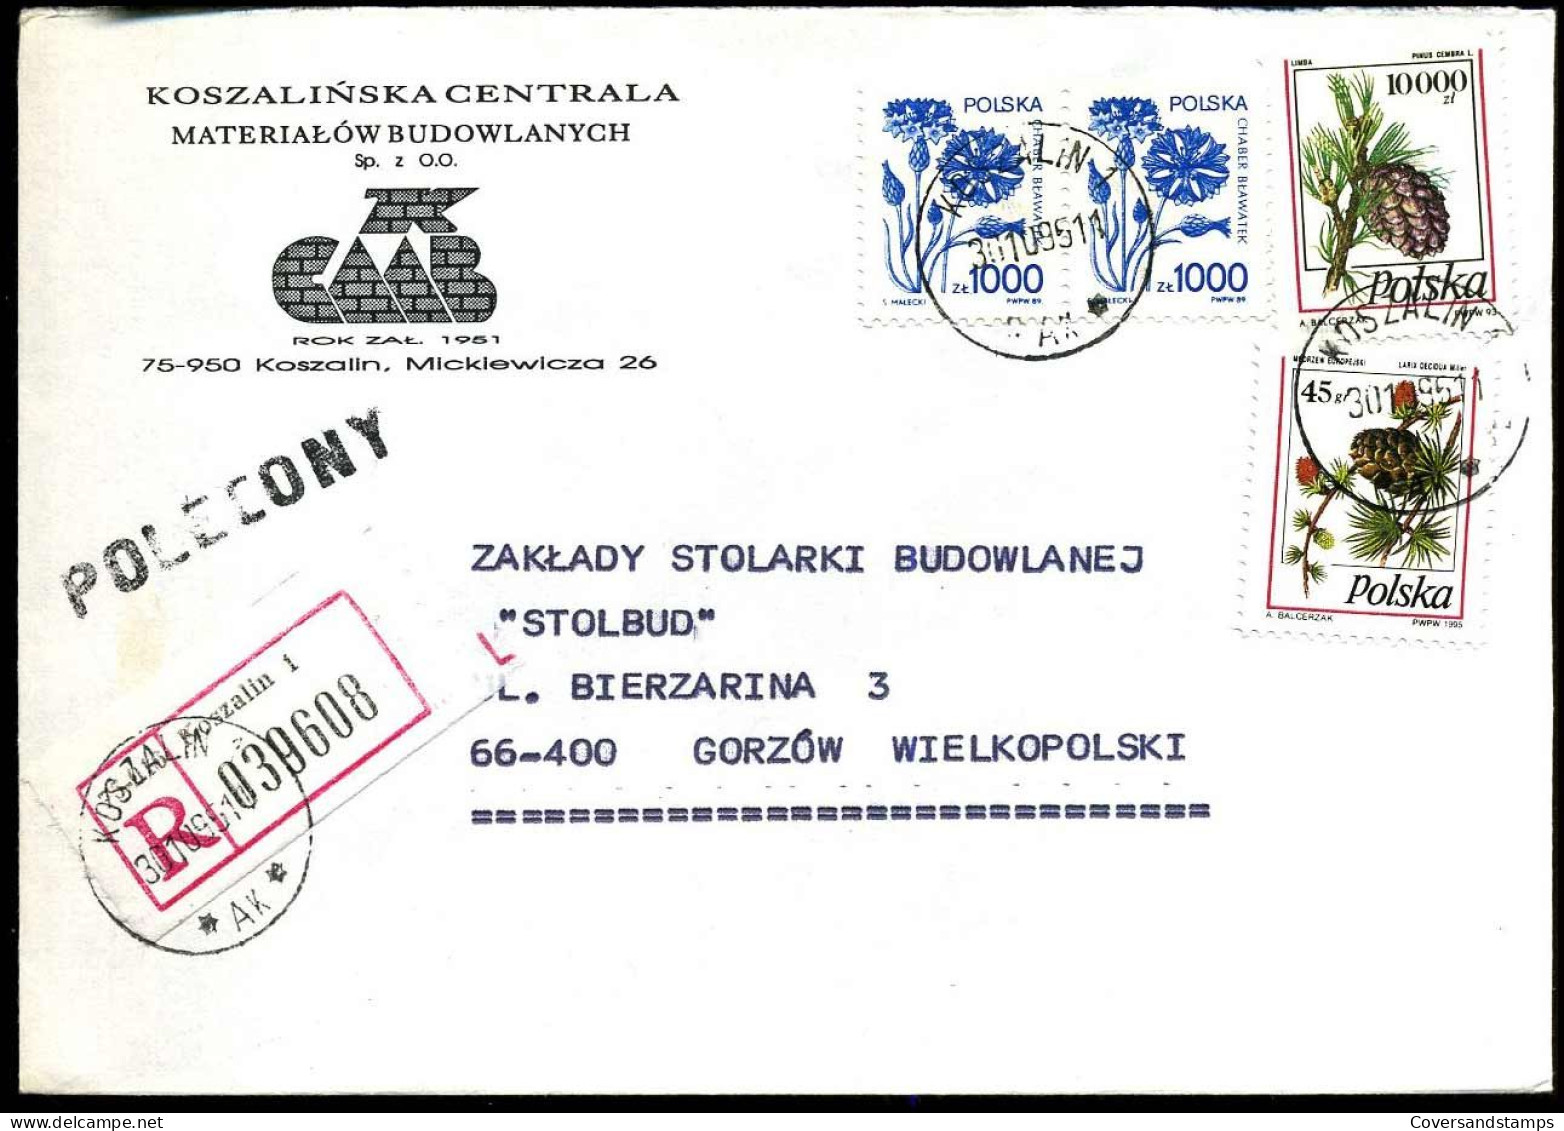 Registered Cover - "Koszalinska Centrala, Materialow Budowlanych" - Lettres & Documents